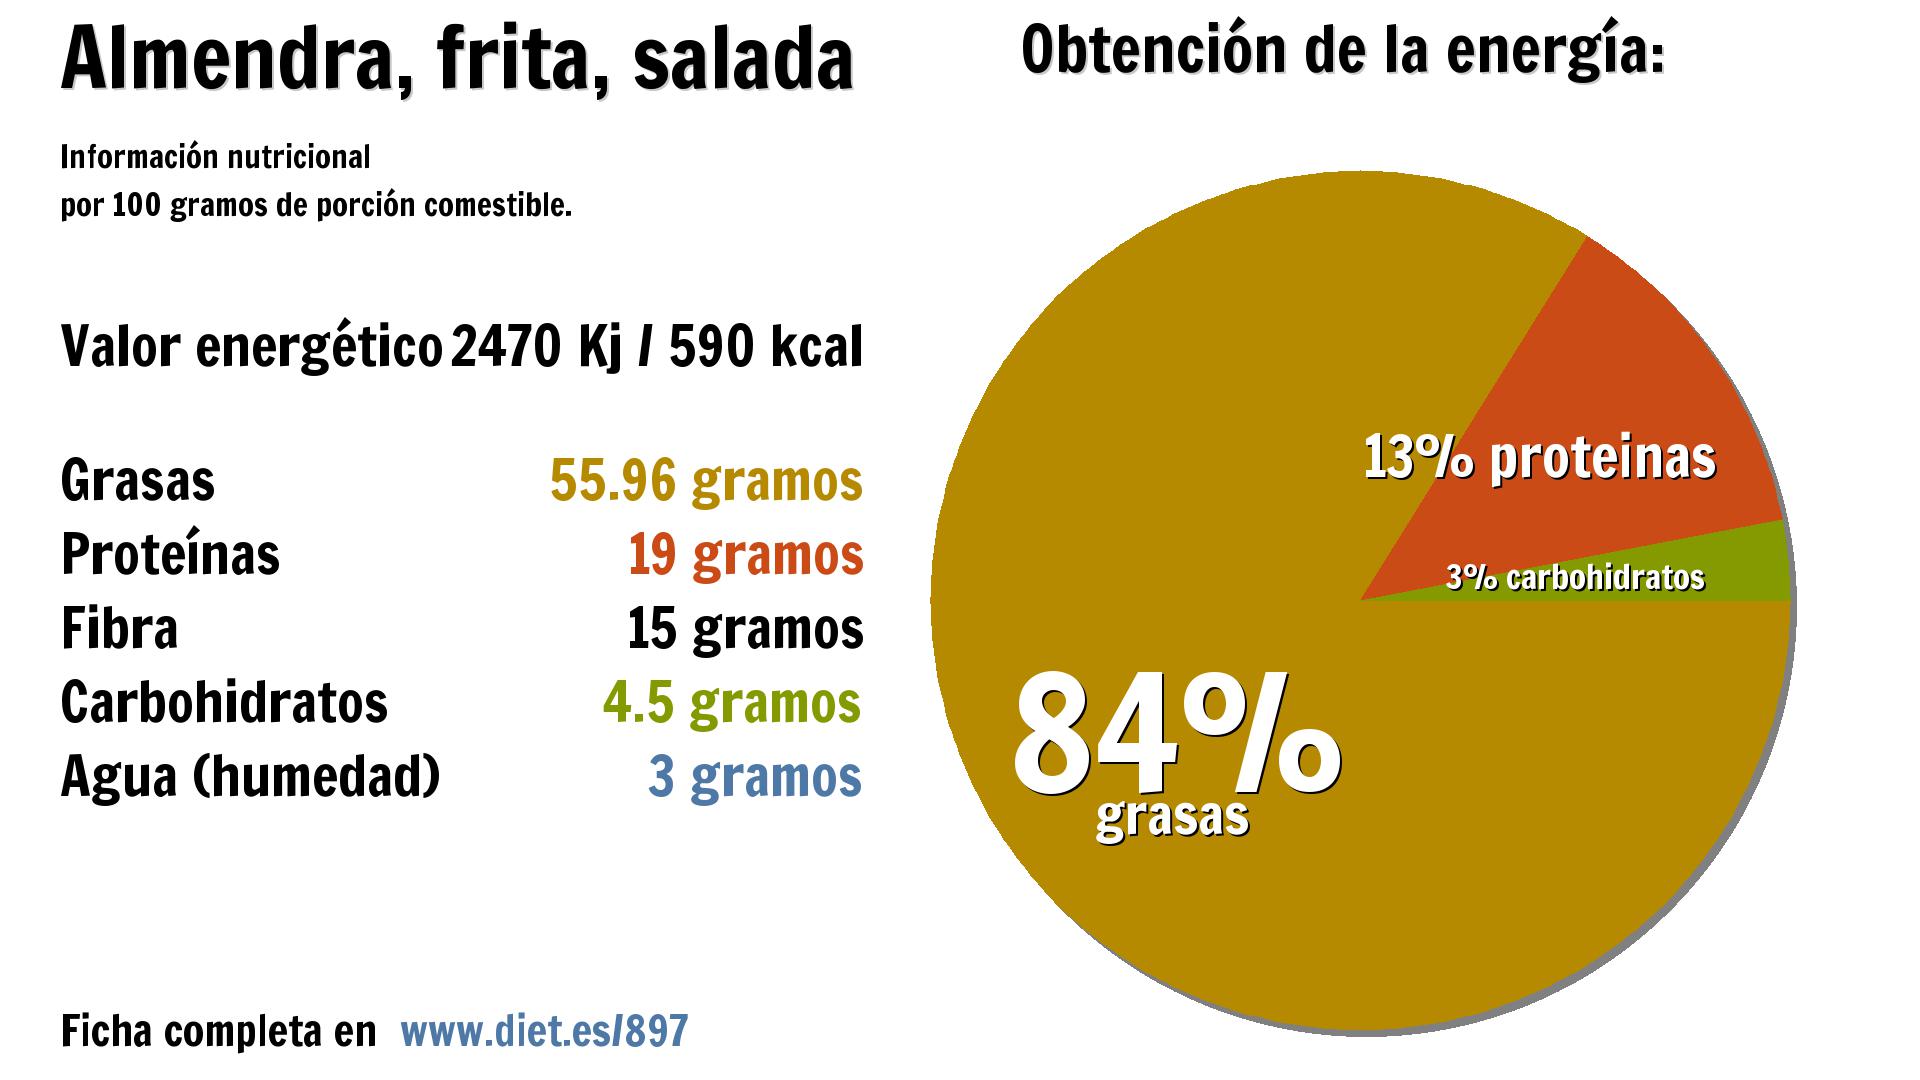 Almendra, frita, salada: energía 2470 Kj, grasas 56 g., proteínas 19 g., fibra 15 g., carbohidratos 5 g. y agua 3 g.